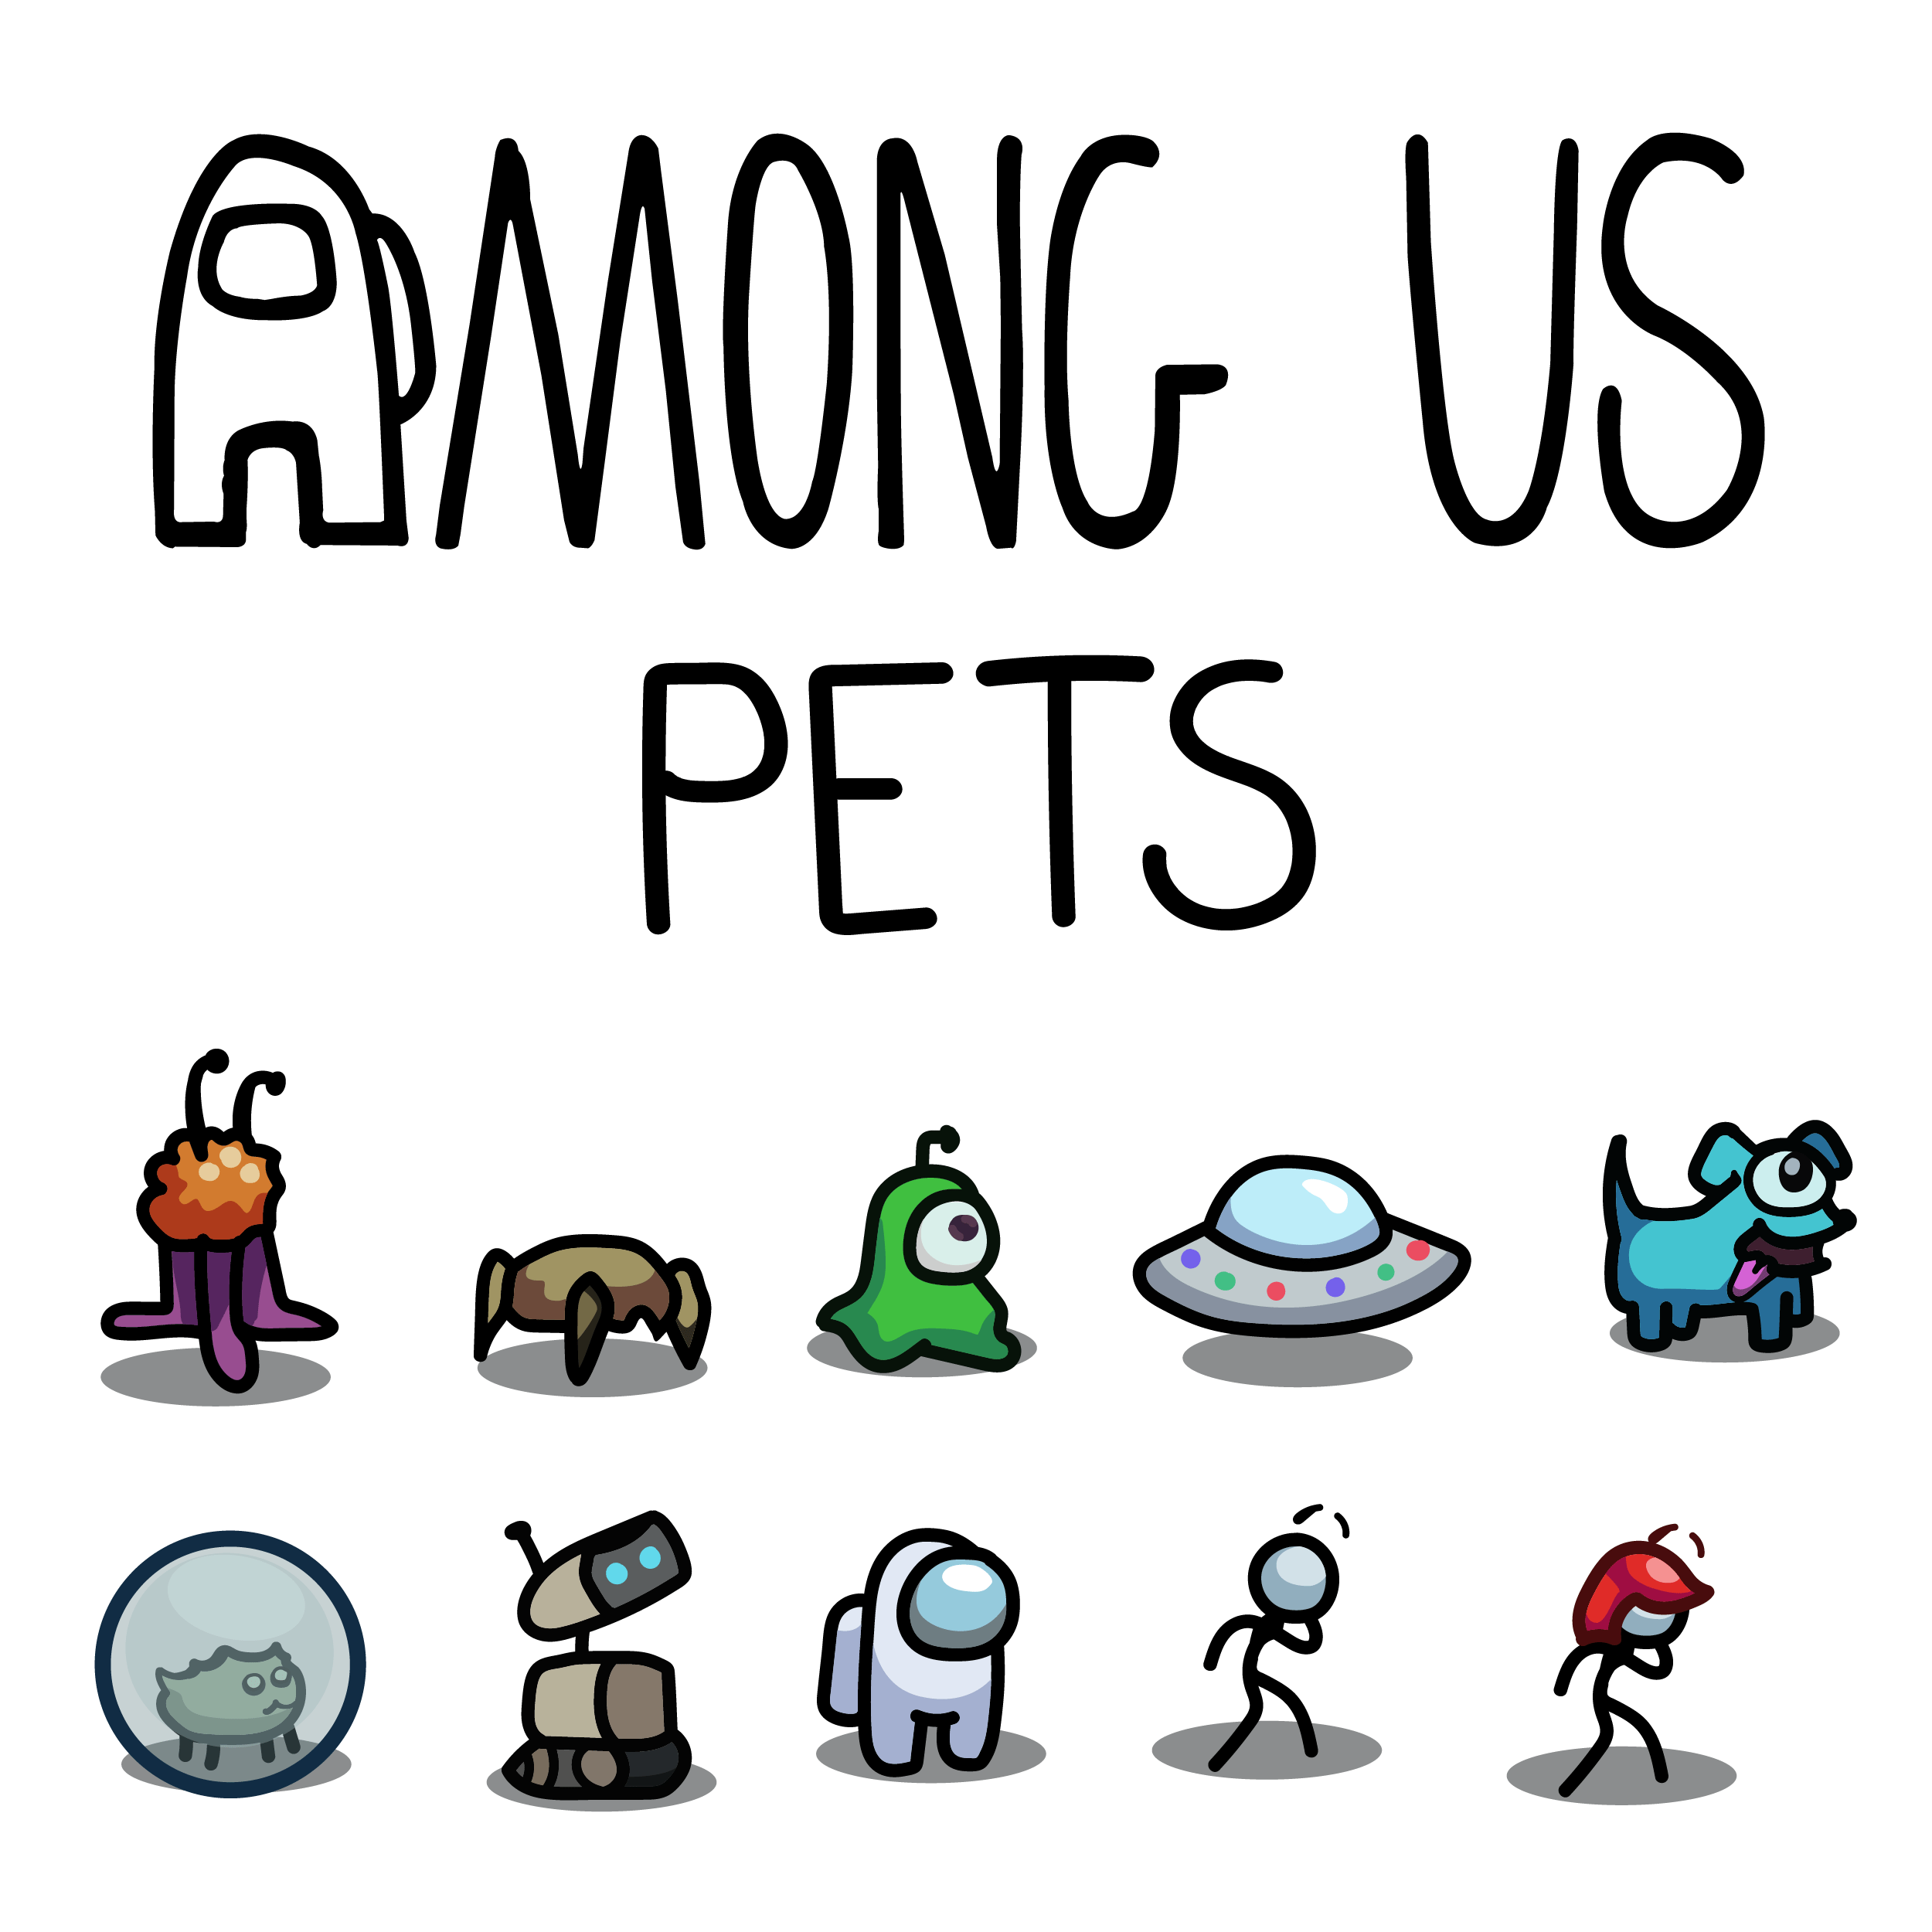 among us pets